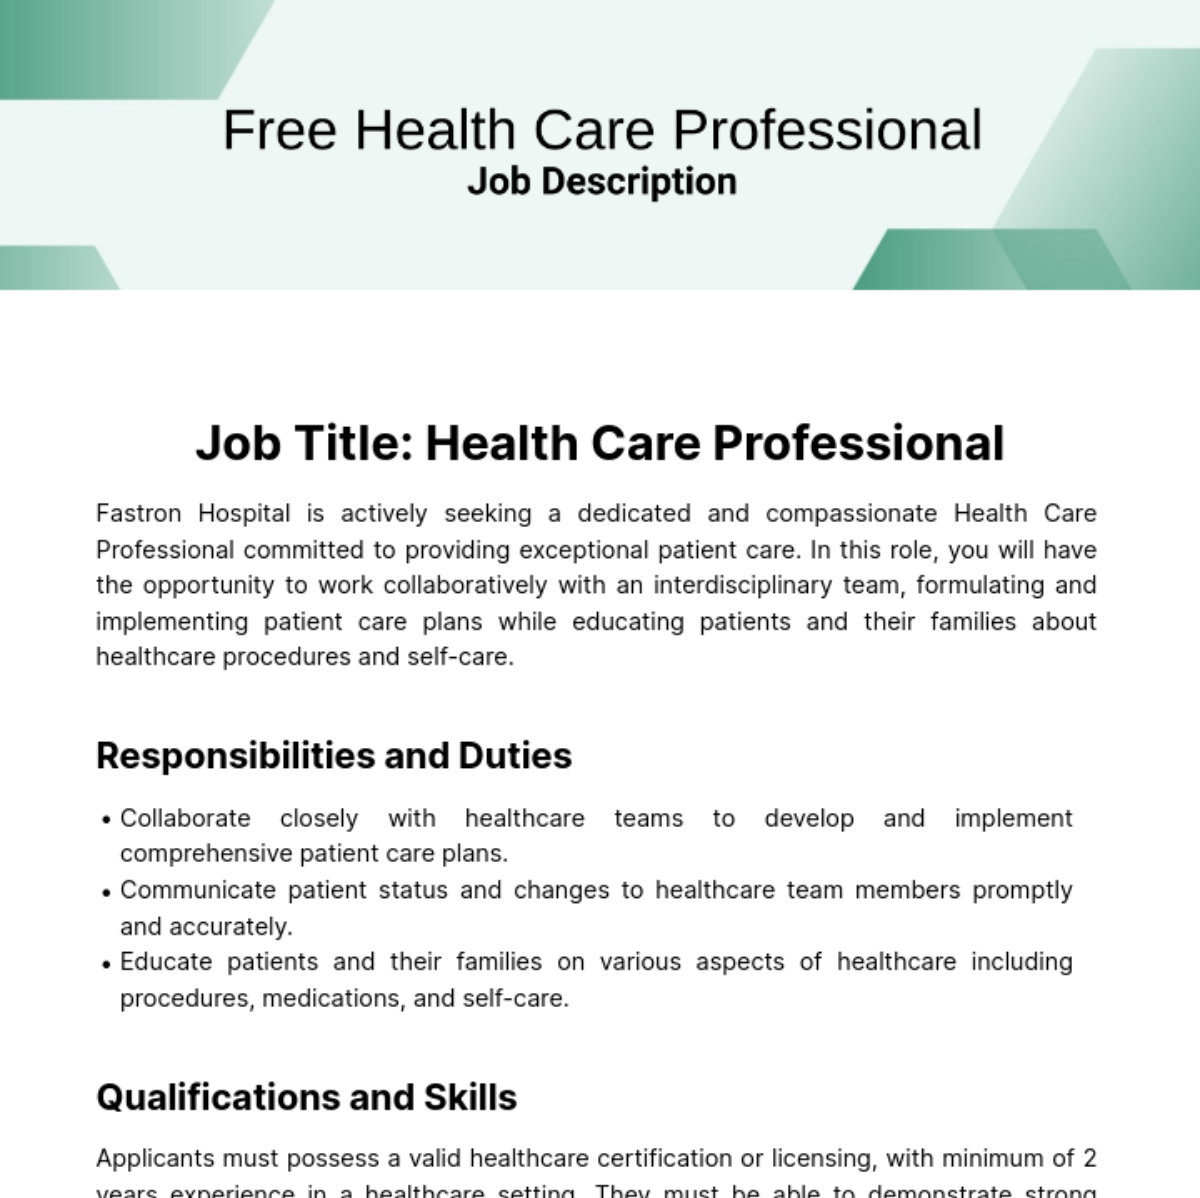 Free Health Care Job Description Template